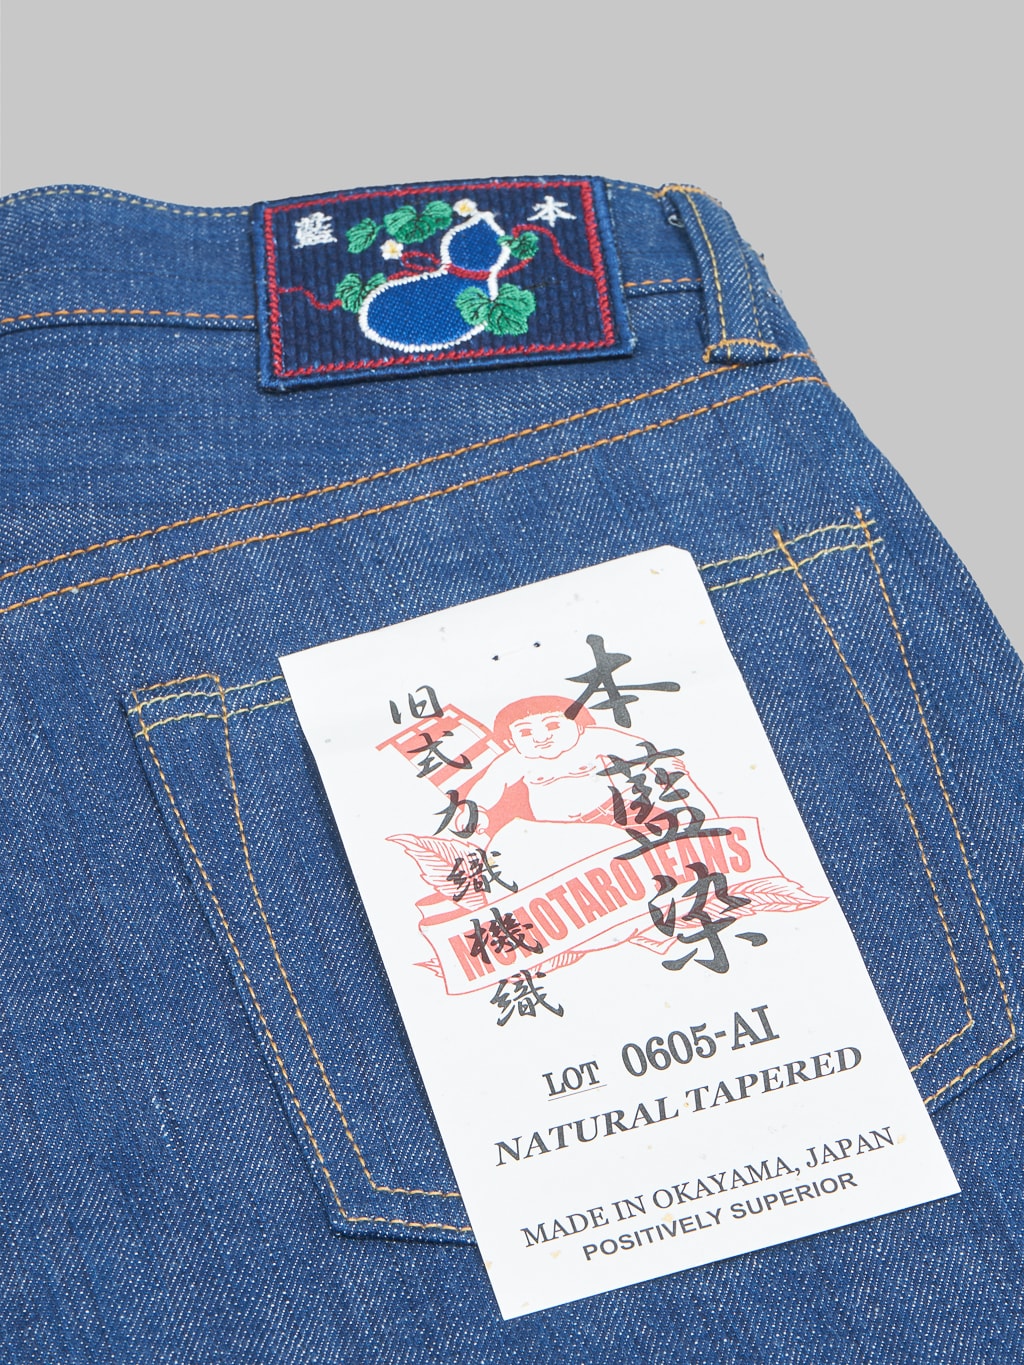 momotaro 0605 ai natural indigo dyed natural tapered denim jeans pocket flasher